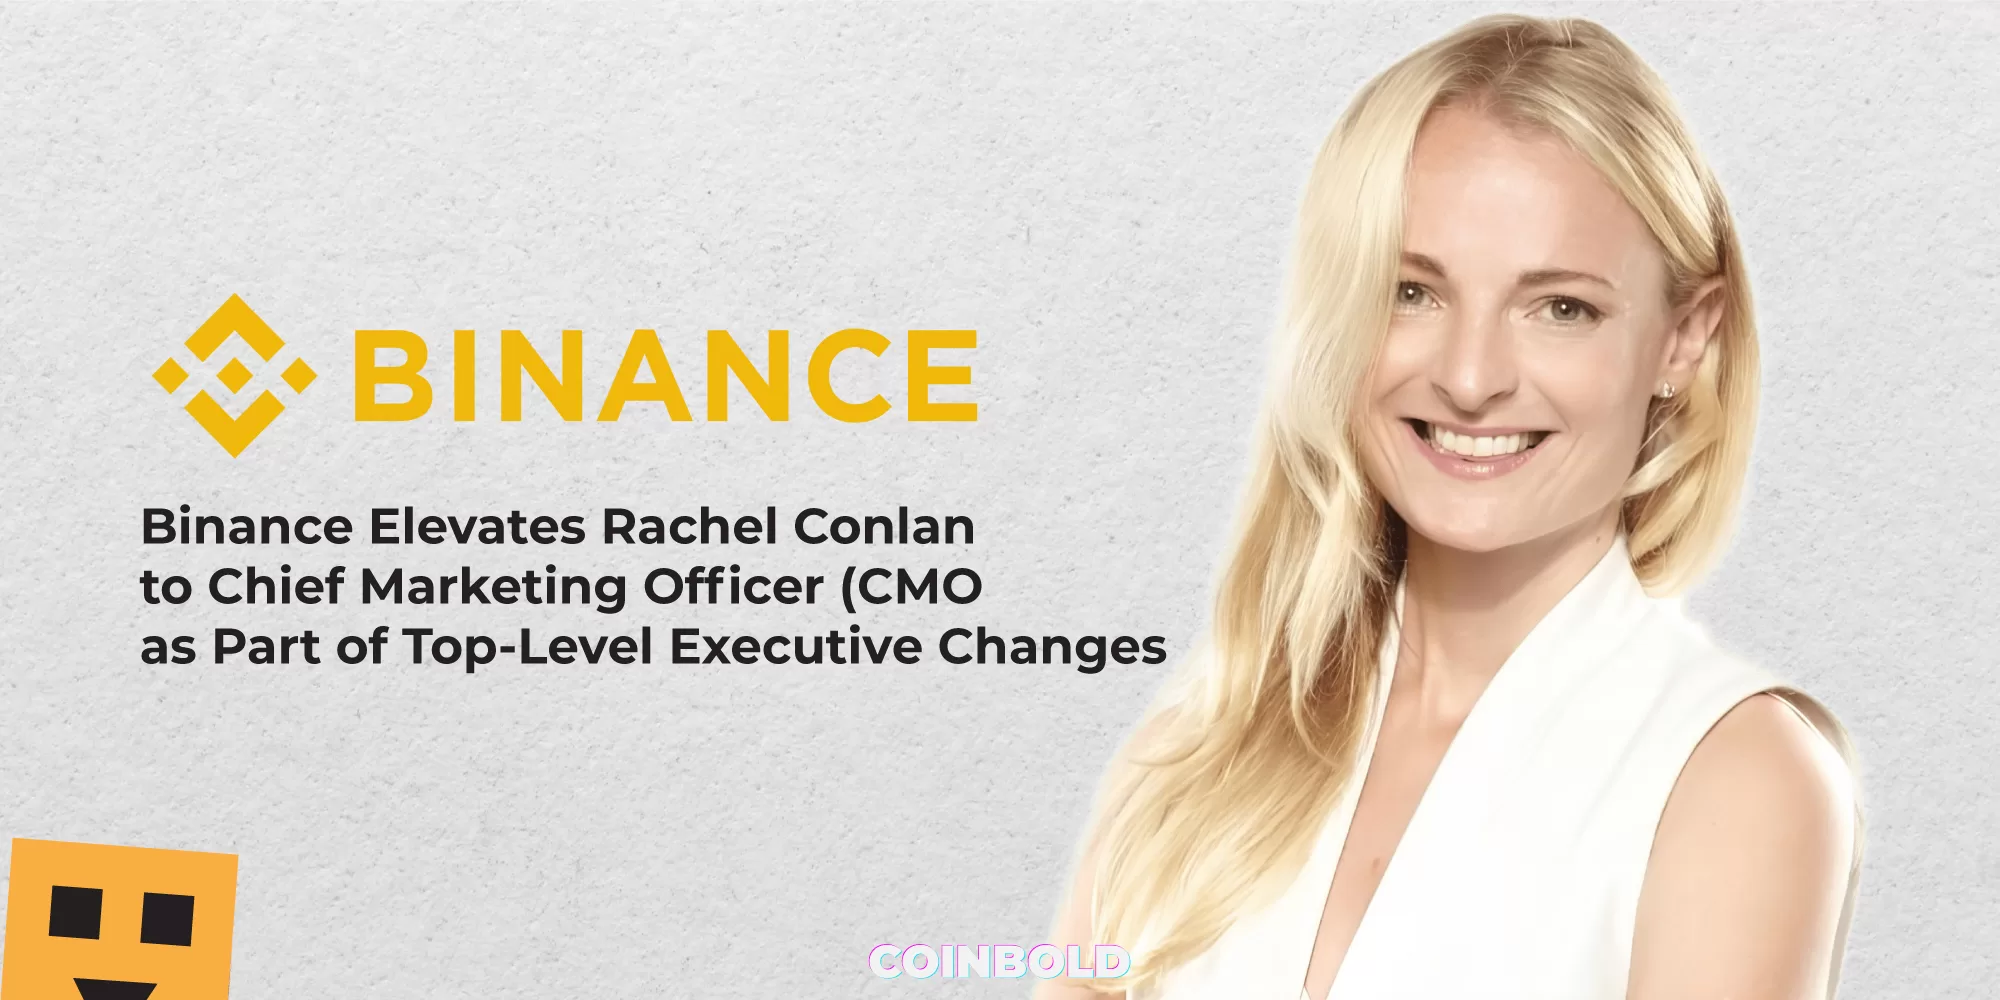 Binance Elevates Rachel Conlan to Chief Marketing Officer (CMO)